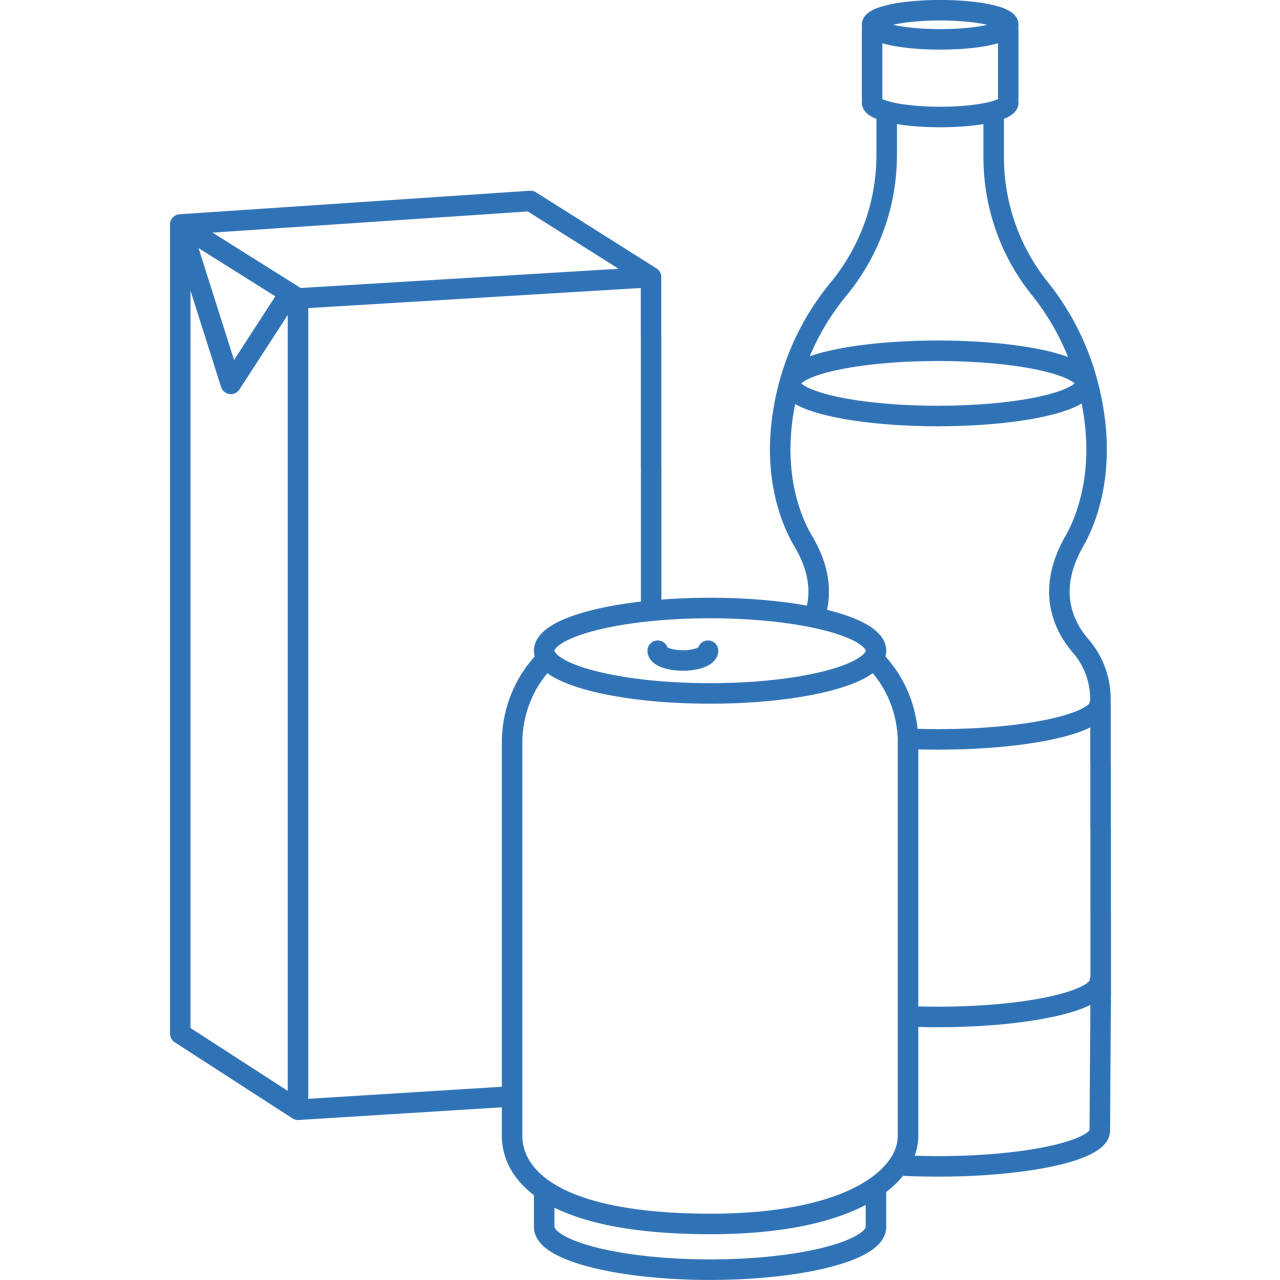 Food and beverage packaging